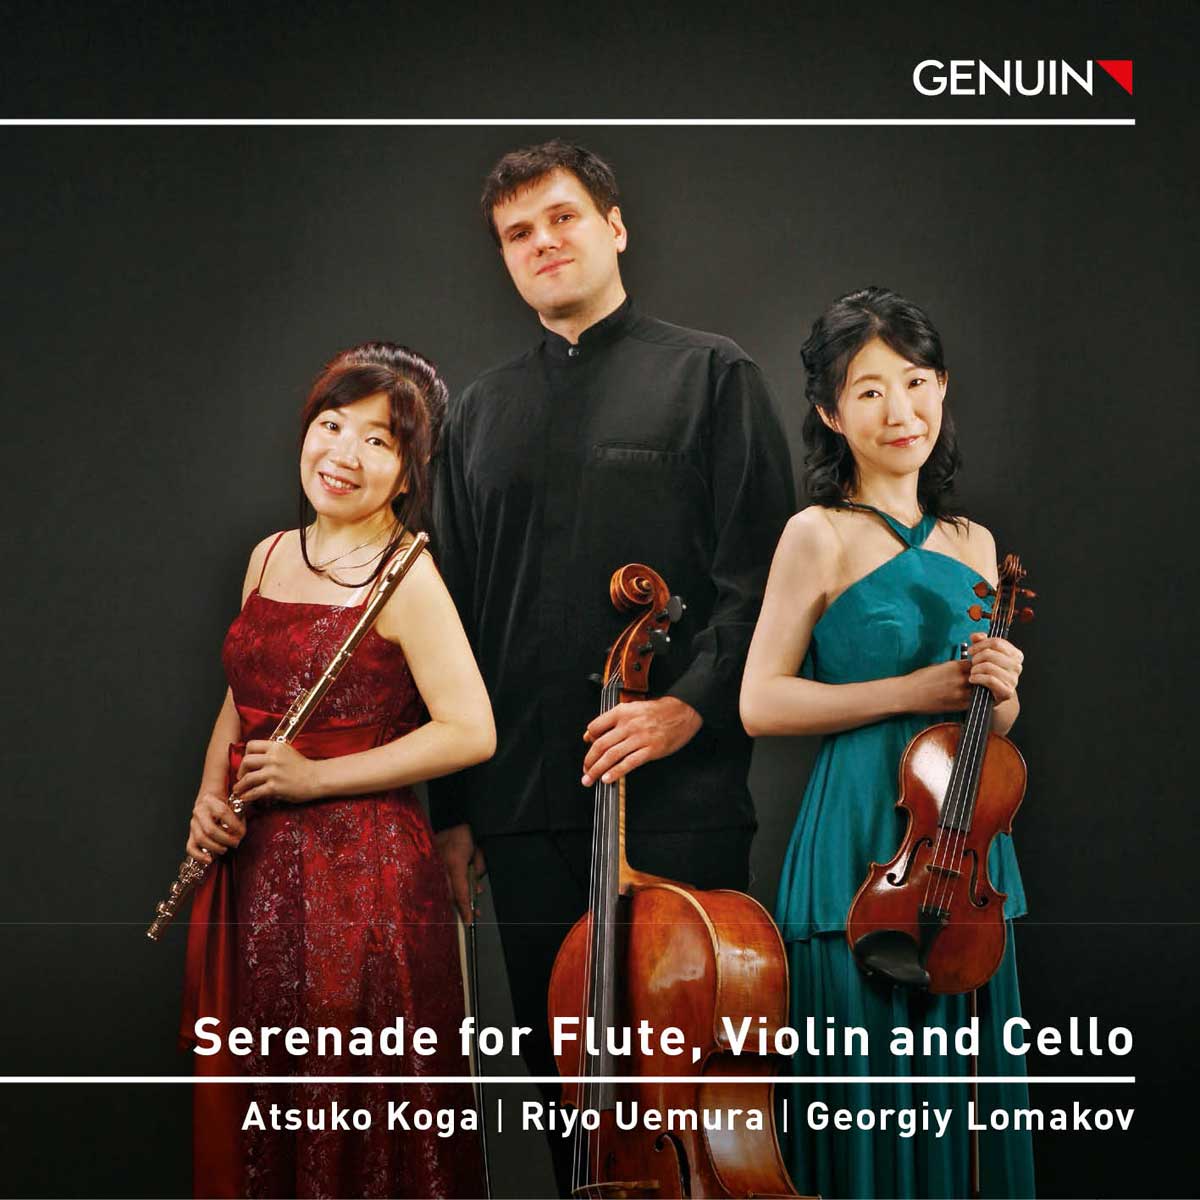 CD album cover 'Serenade for Flute, Violin and Cello' (GEN 23834) with Atsuko Koga, Riyo Uemura, Georgiy Lomakov